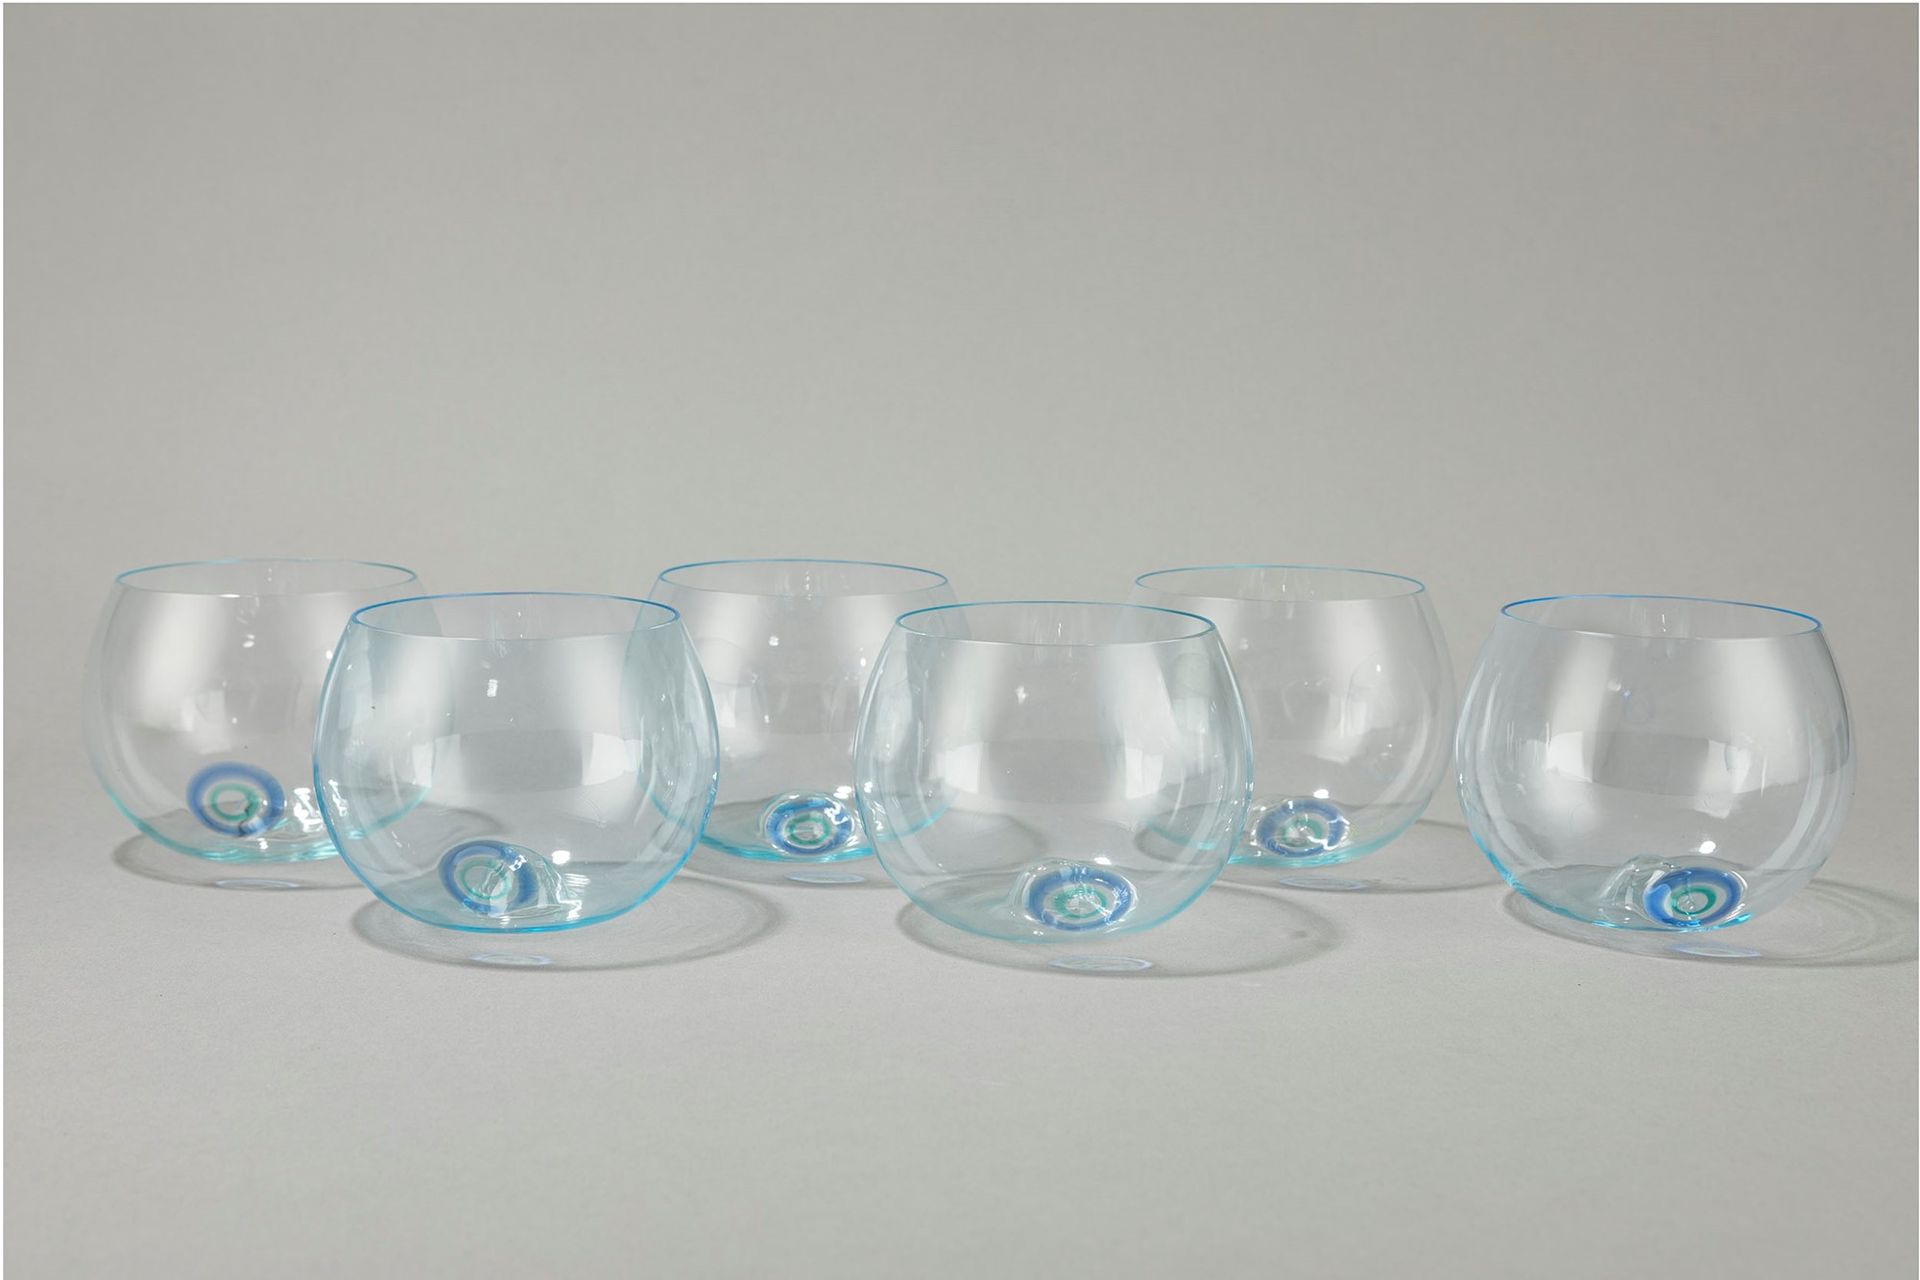 Gian Maria Potenza, Lino Tagliapietra Six glasses, 1968

H 9 cm
blown glass and &hellip;